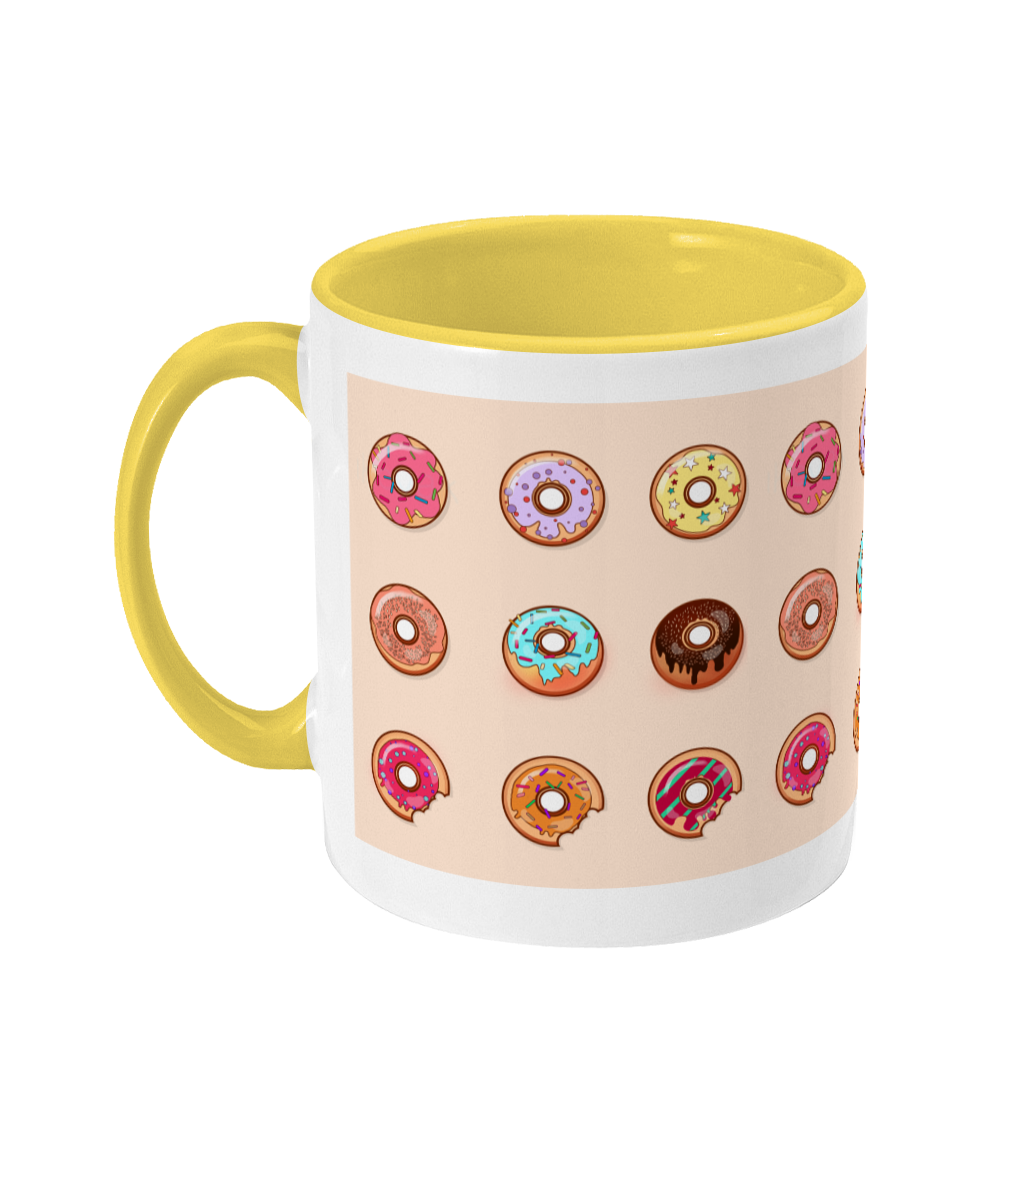 Sweet Shop 'Donuts' Mug